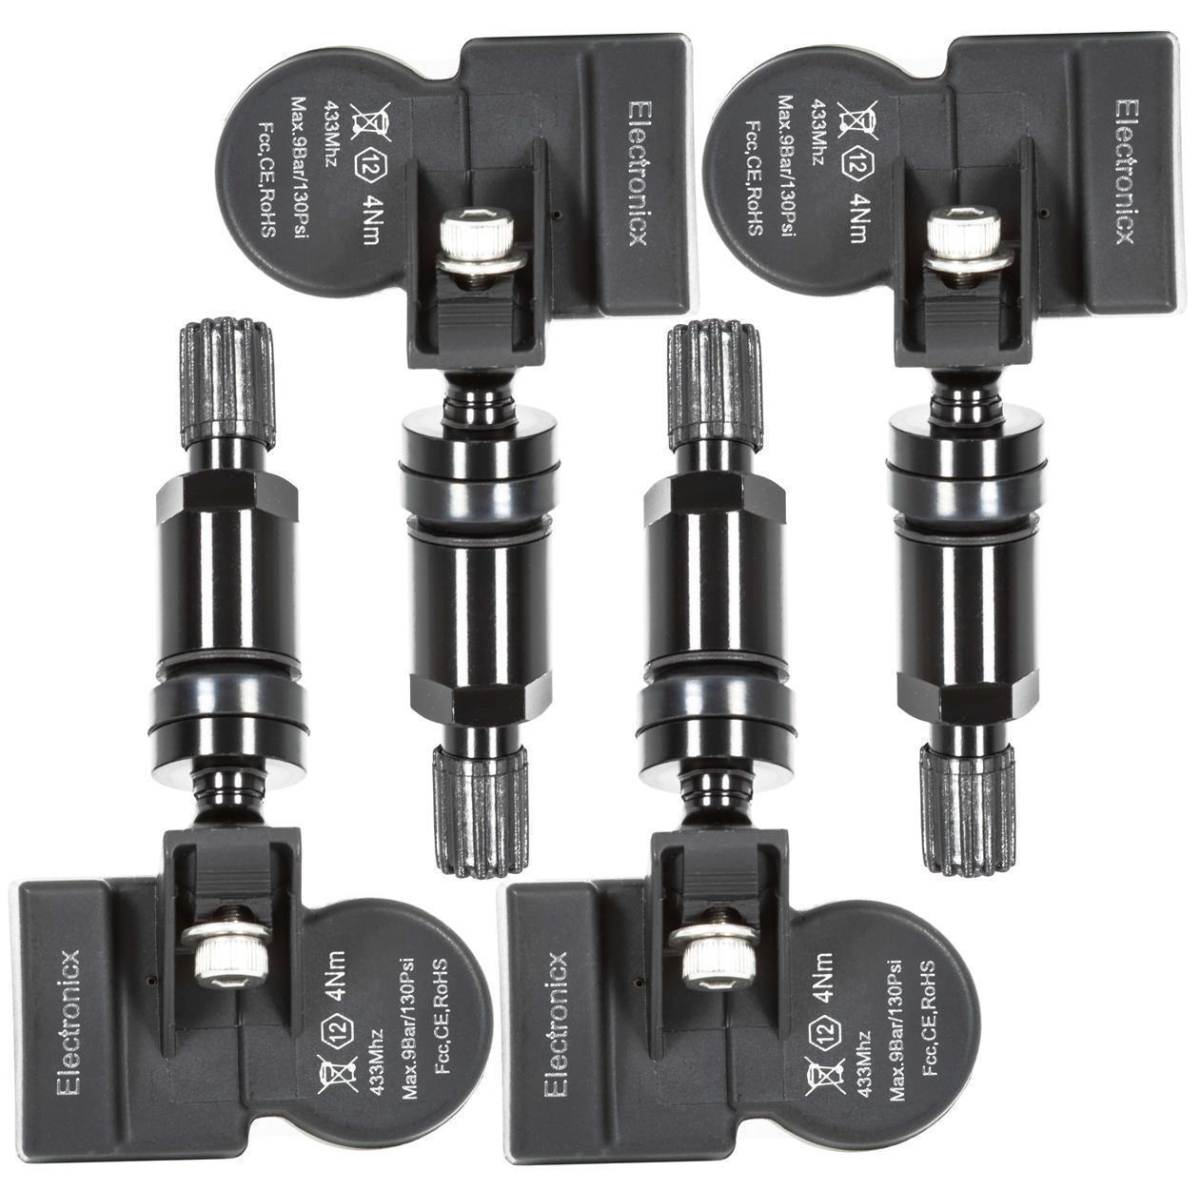 4x TPMS tire pressure sensors metal valve black for BMW G30 G31 F90 G11 G12 G14 G15 G16 F90 G01 G08 F97